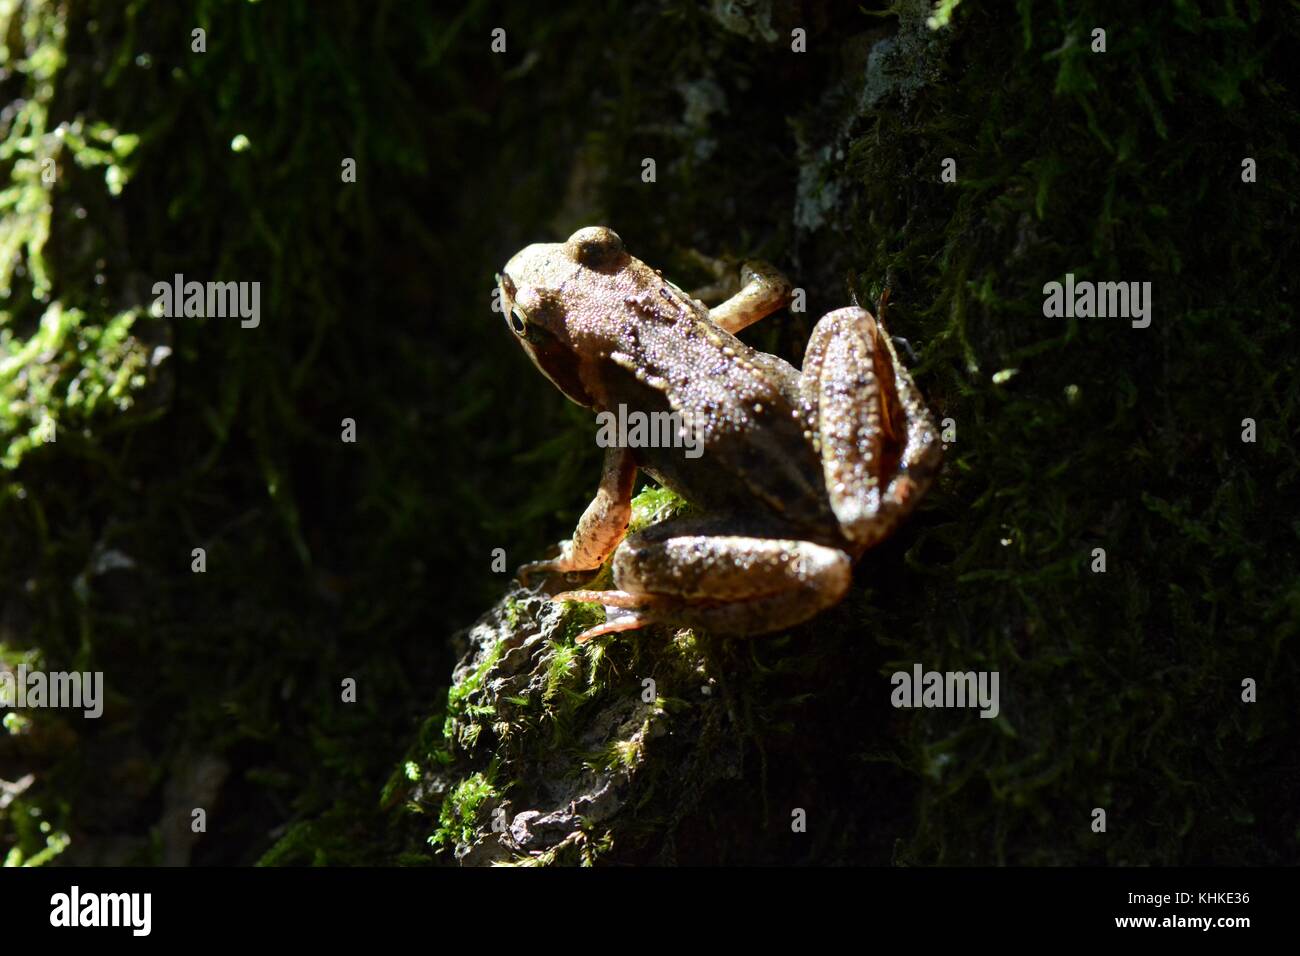 Common european frog on moss Stock Photo